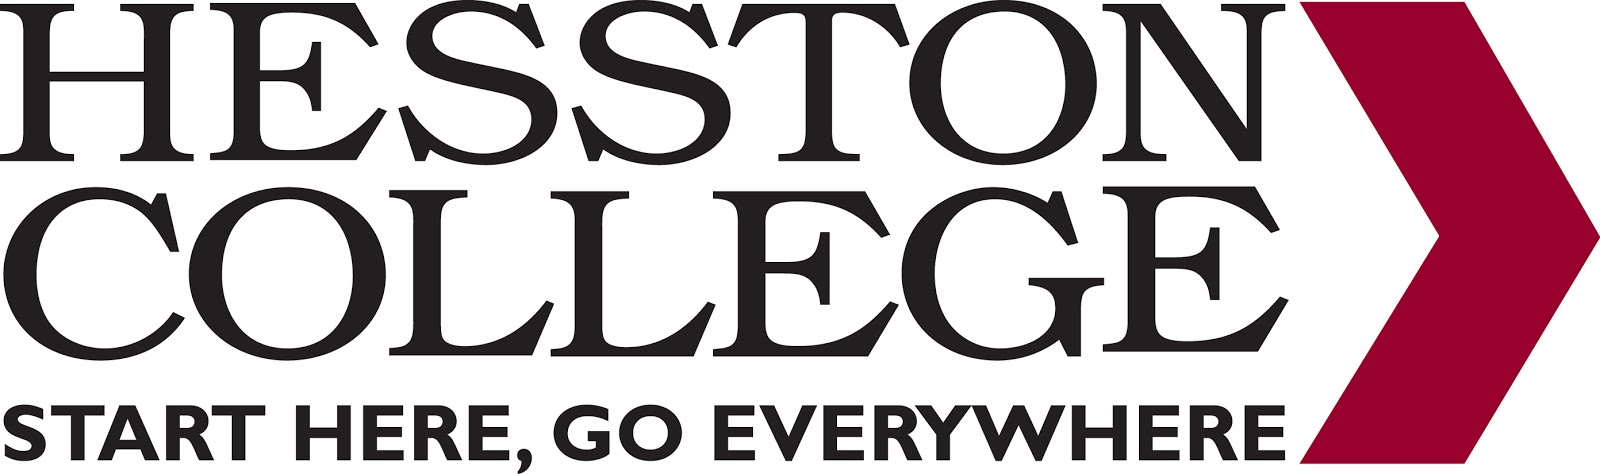 Hesston College logo